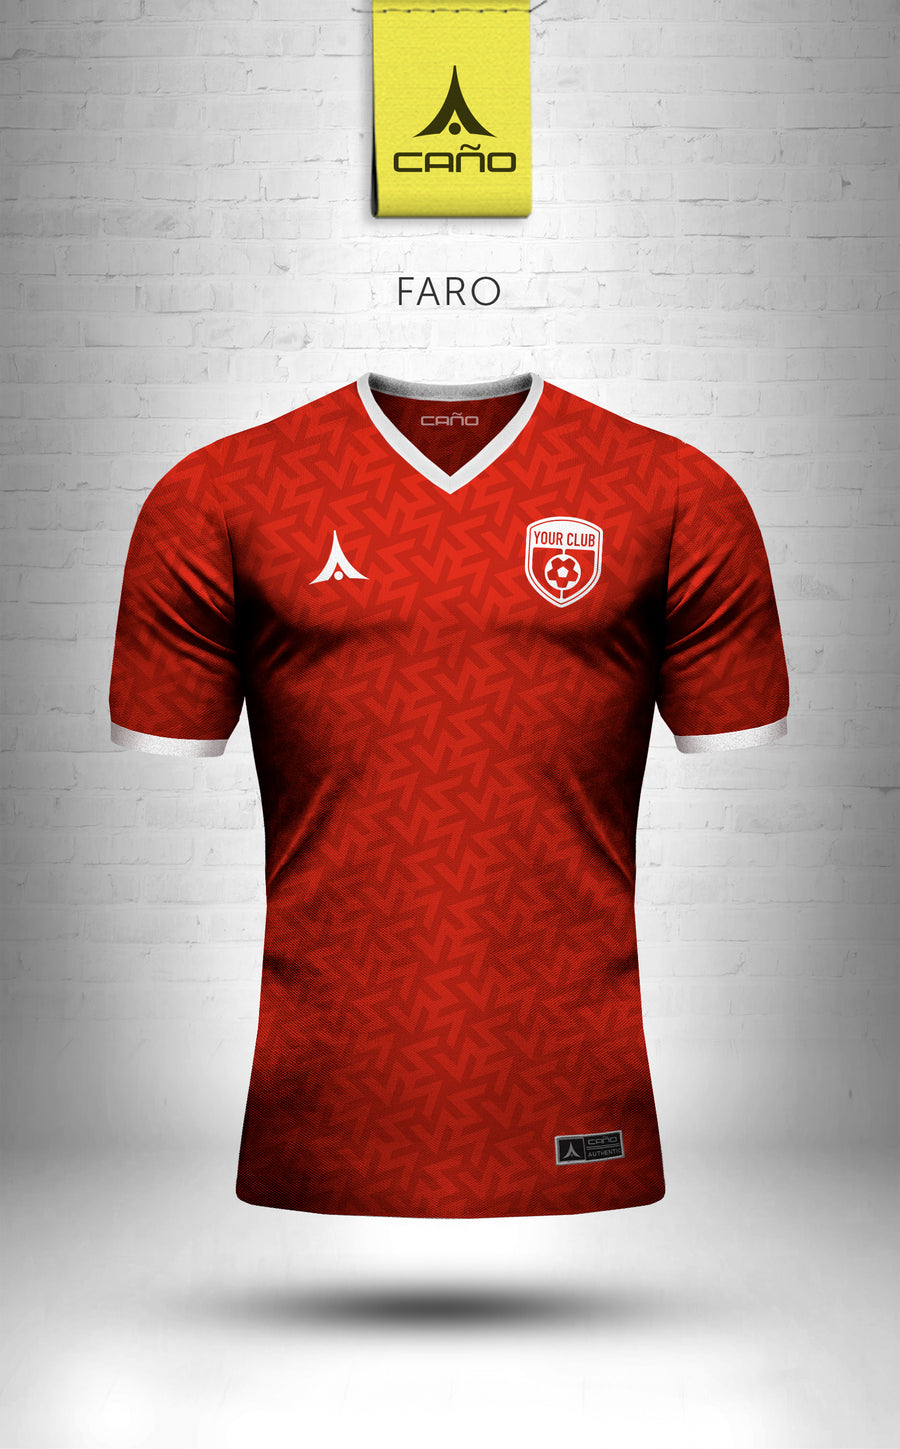 Faro in red/white